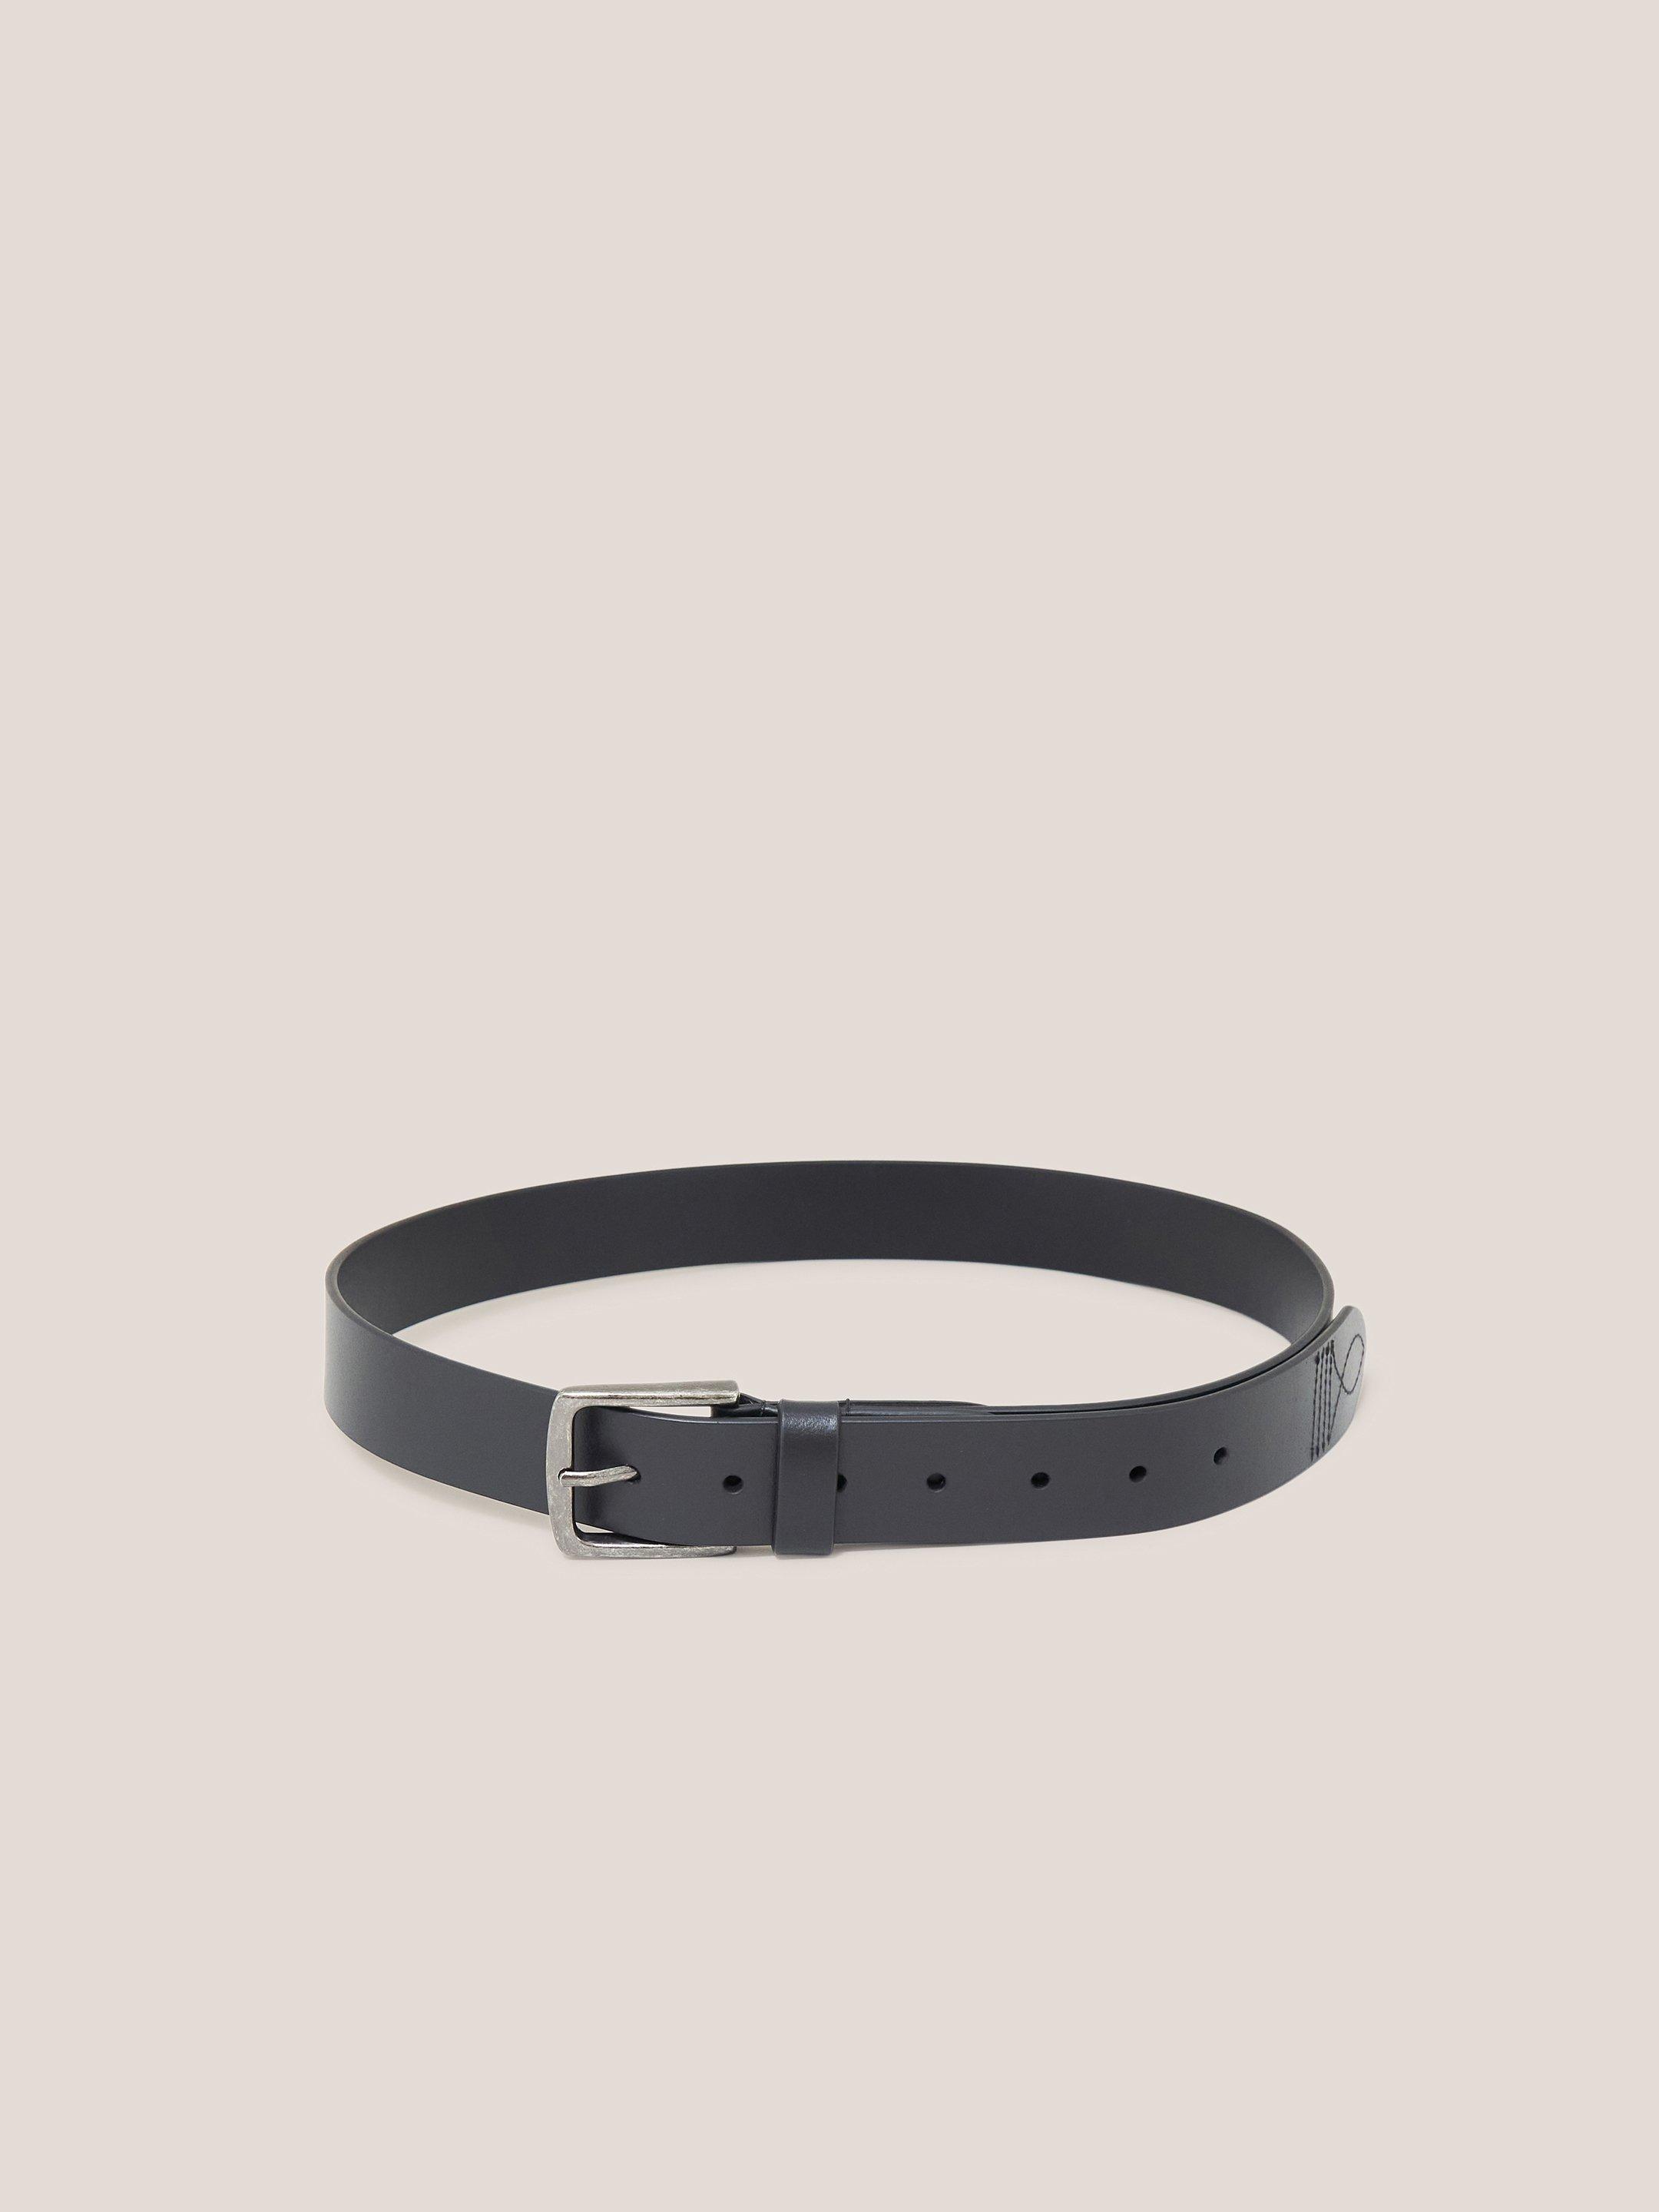 Smart Leather Belt in PURE BLACK | White Stuff